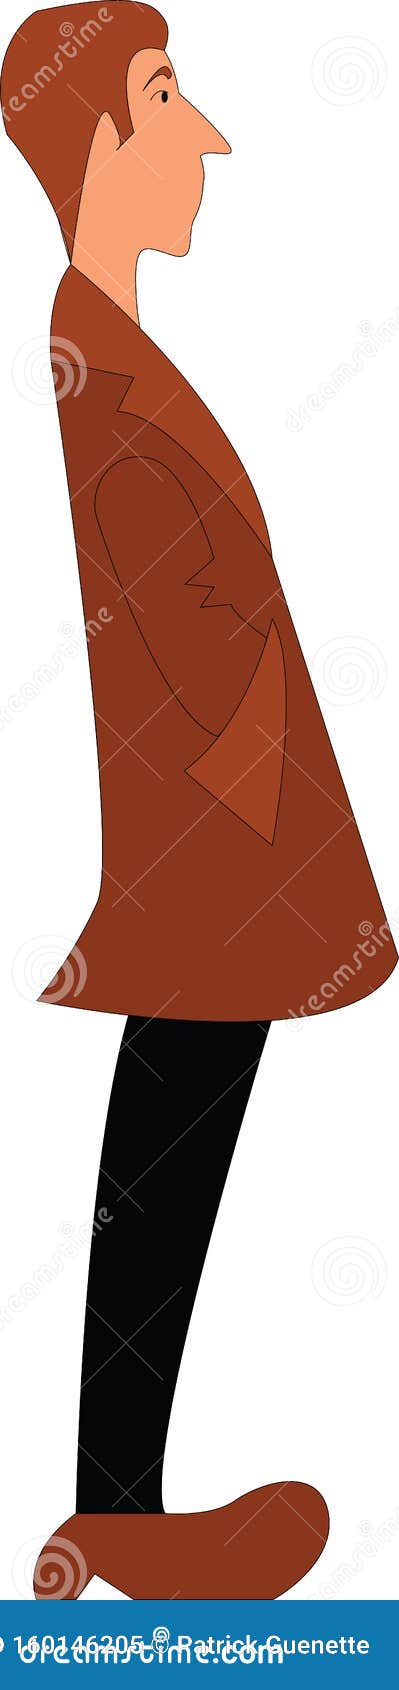 Female Brown Coat Black Pants Hat Stock Photo 1226757166 | Shutterstock